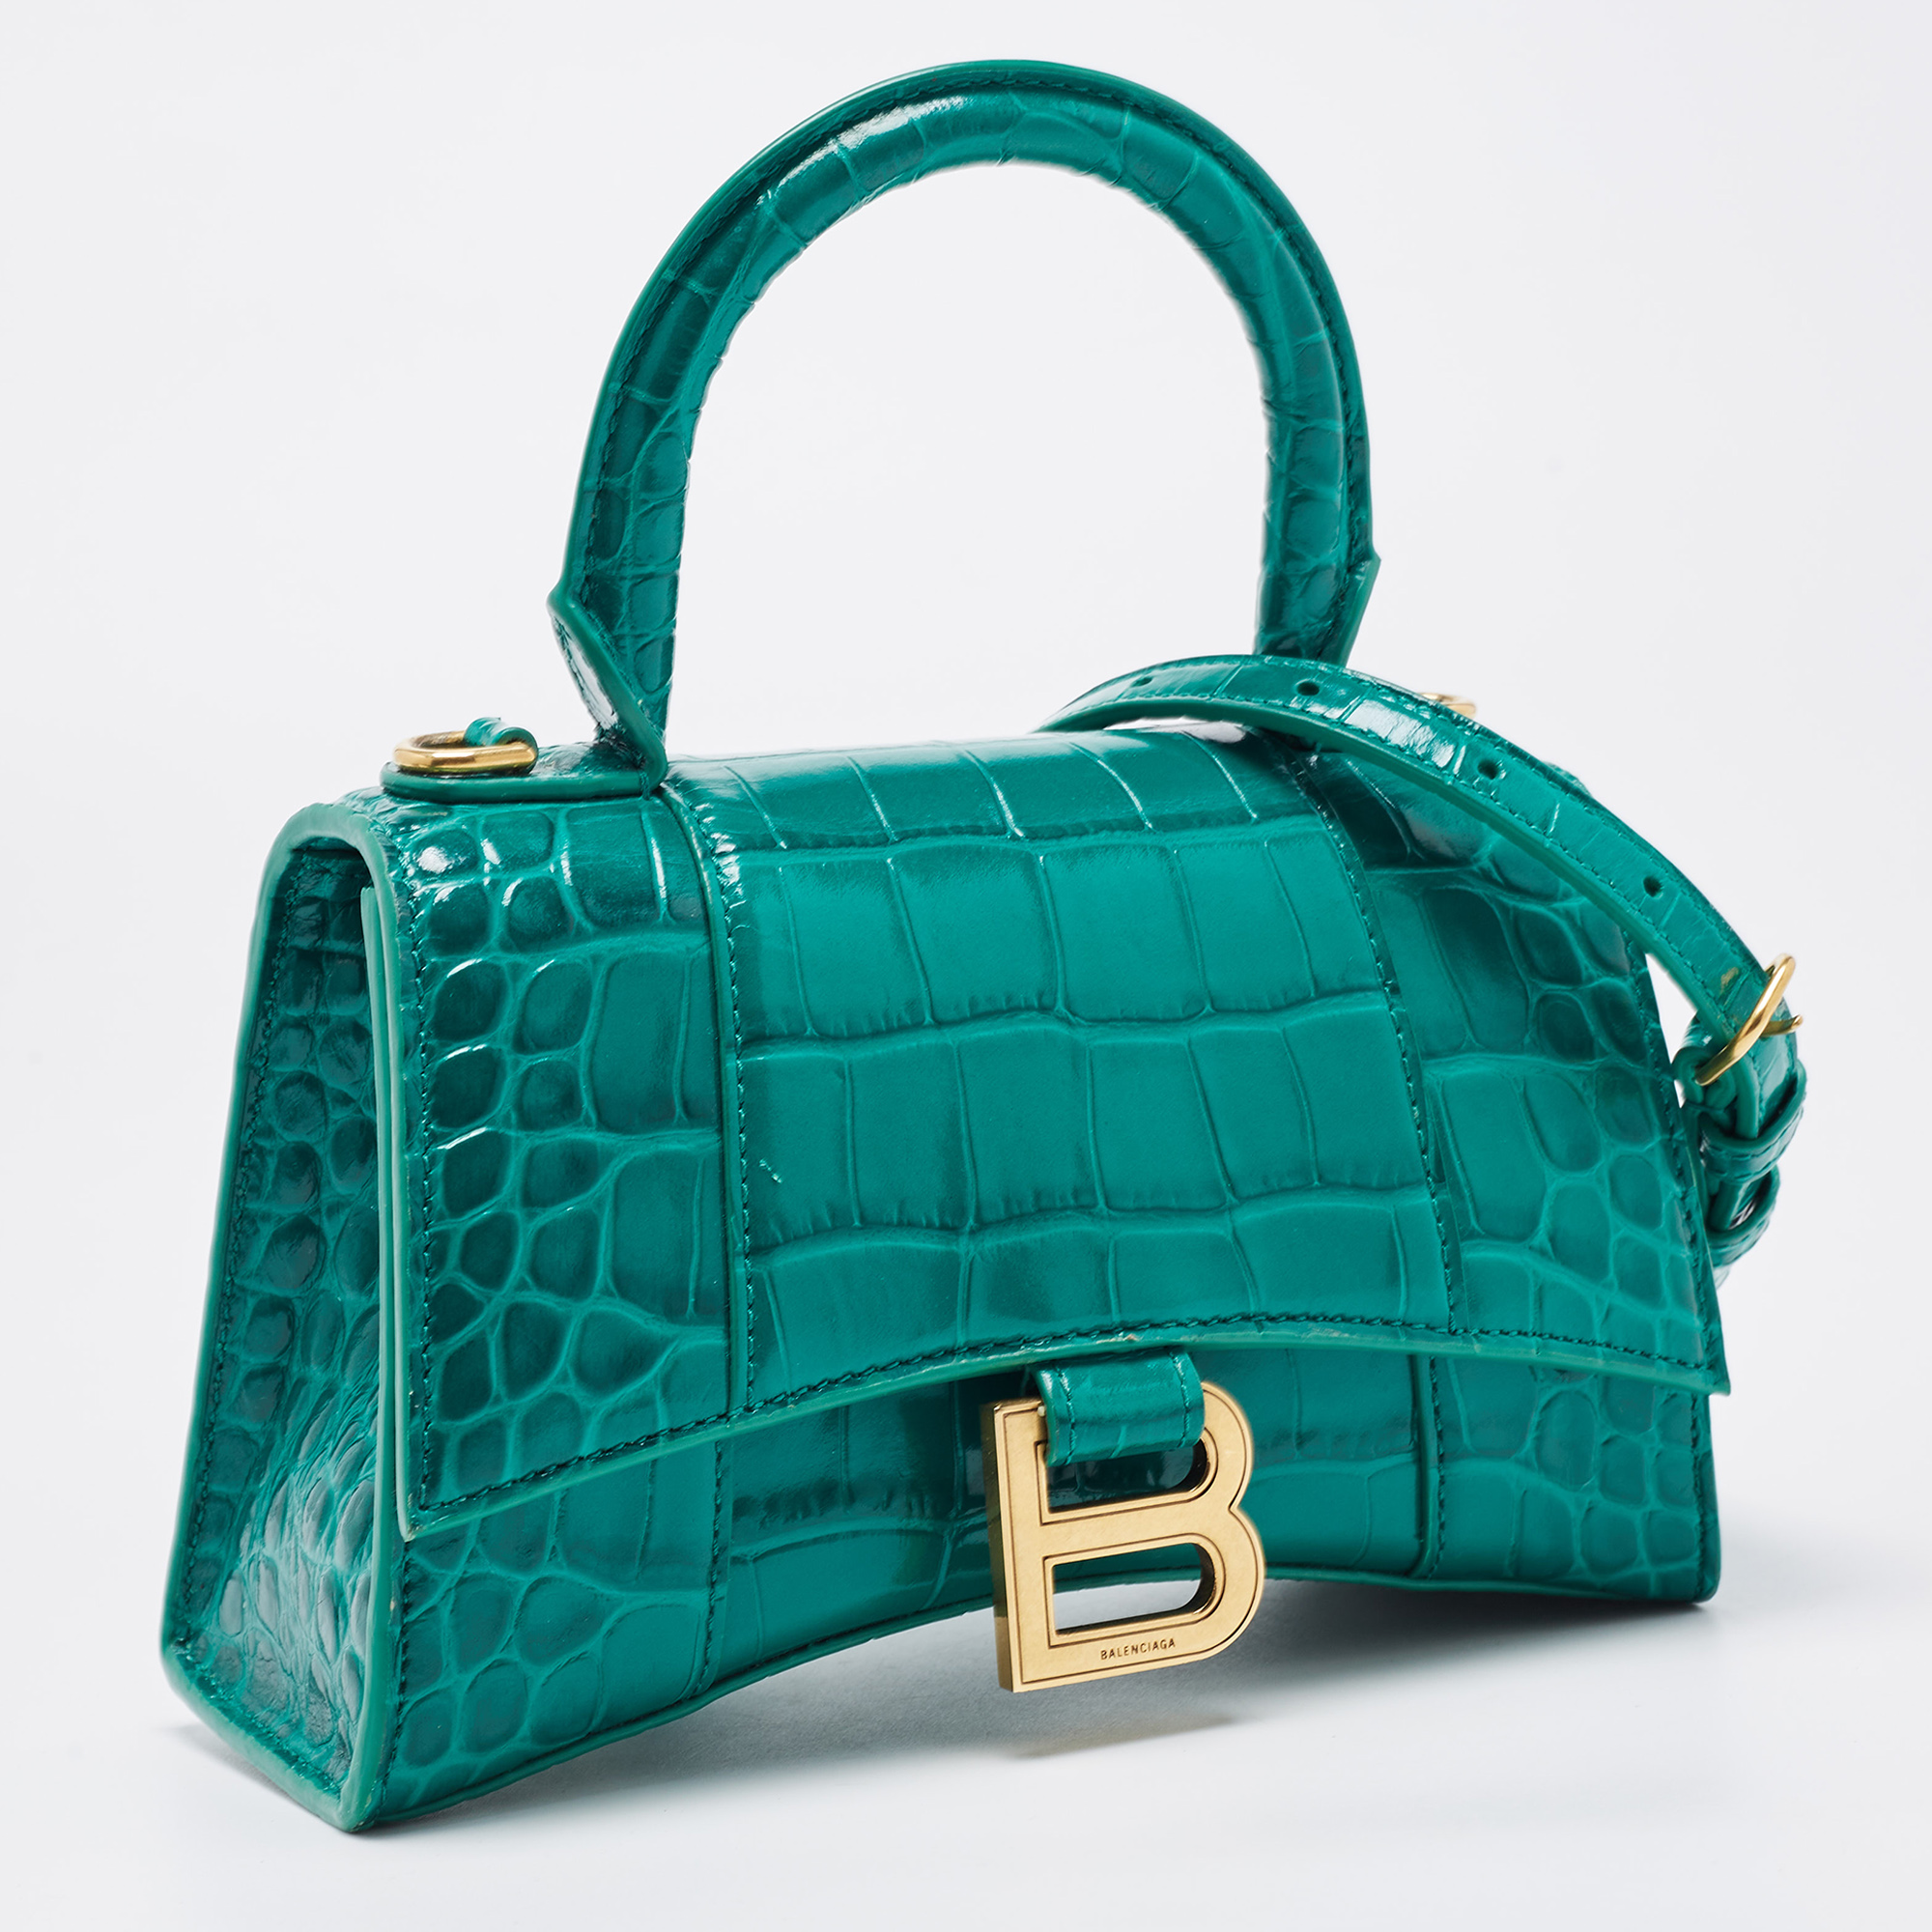 Balenciaga Green Croc Embossed Leather XS Hourglass Top Handle Bag